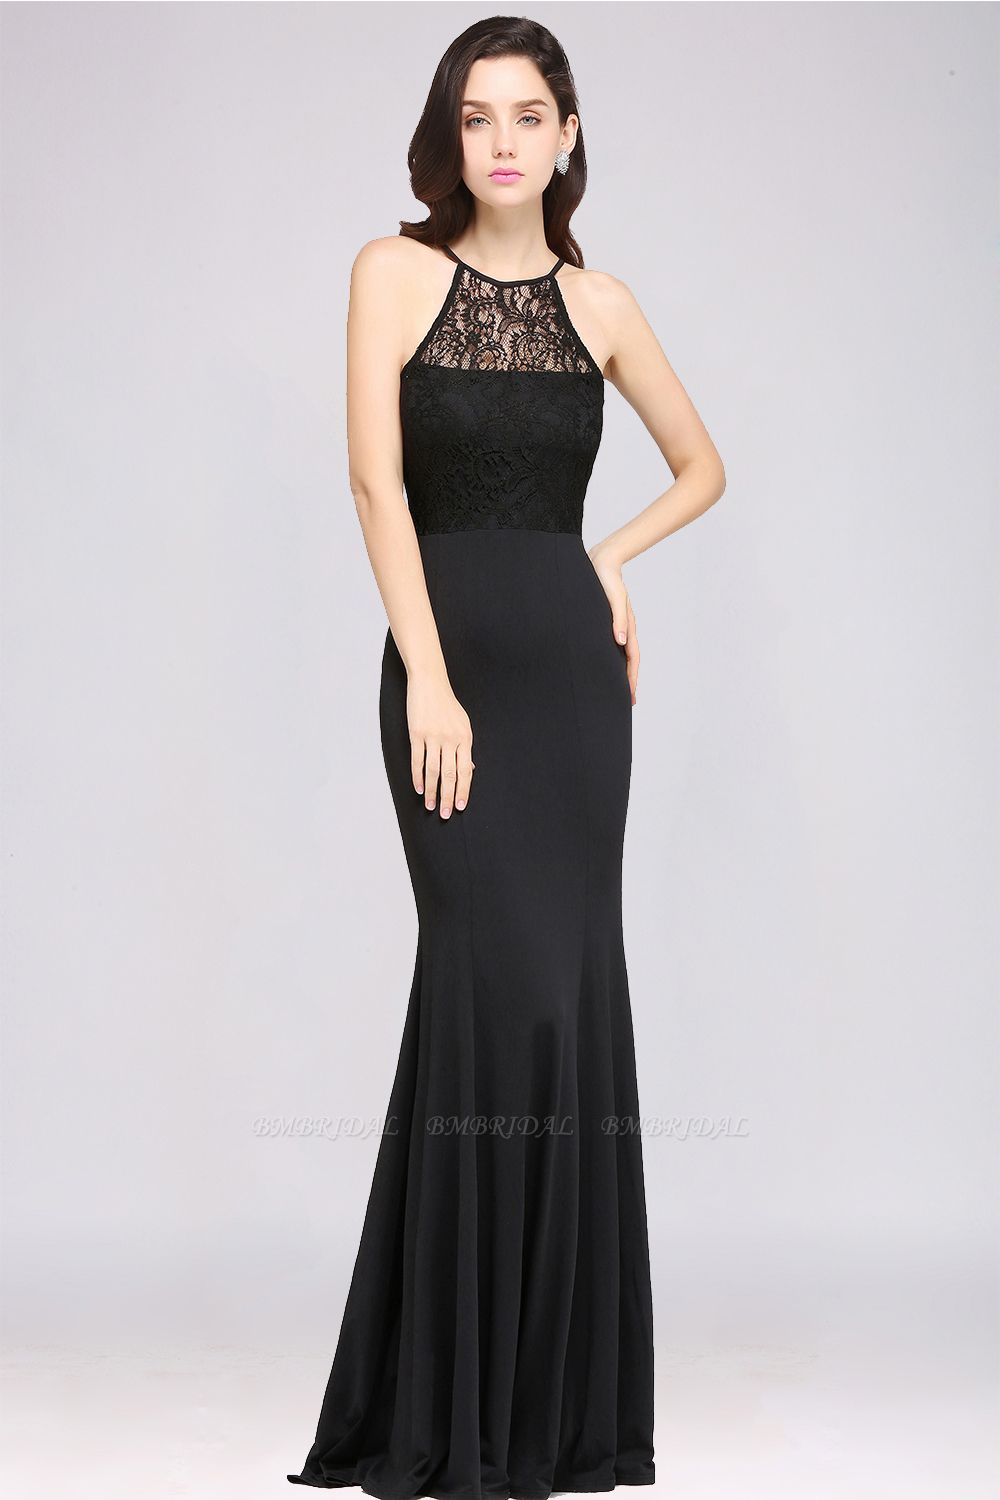 BMbridal Affordable Mermaid Keyhole Black Lace Bridesmaid Dress Online